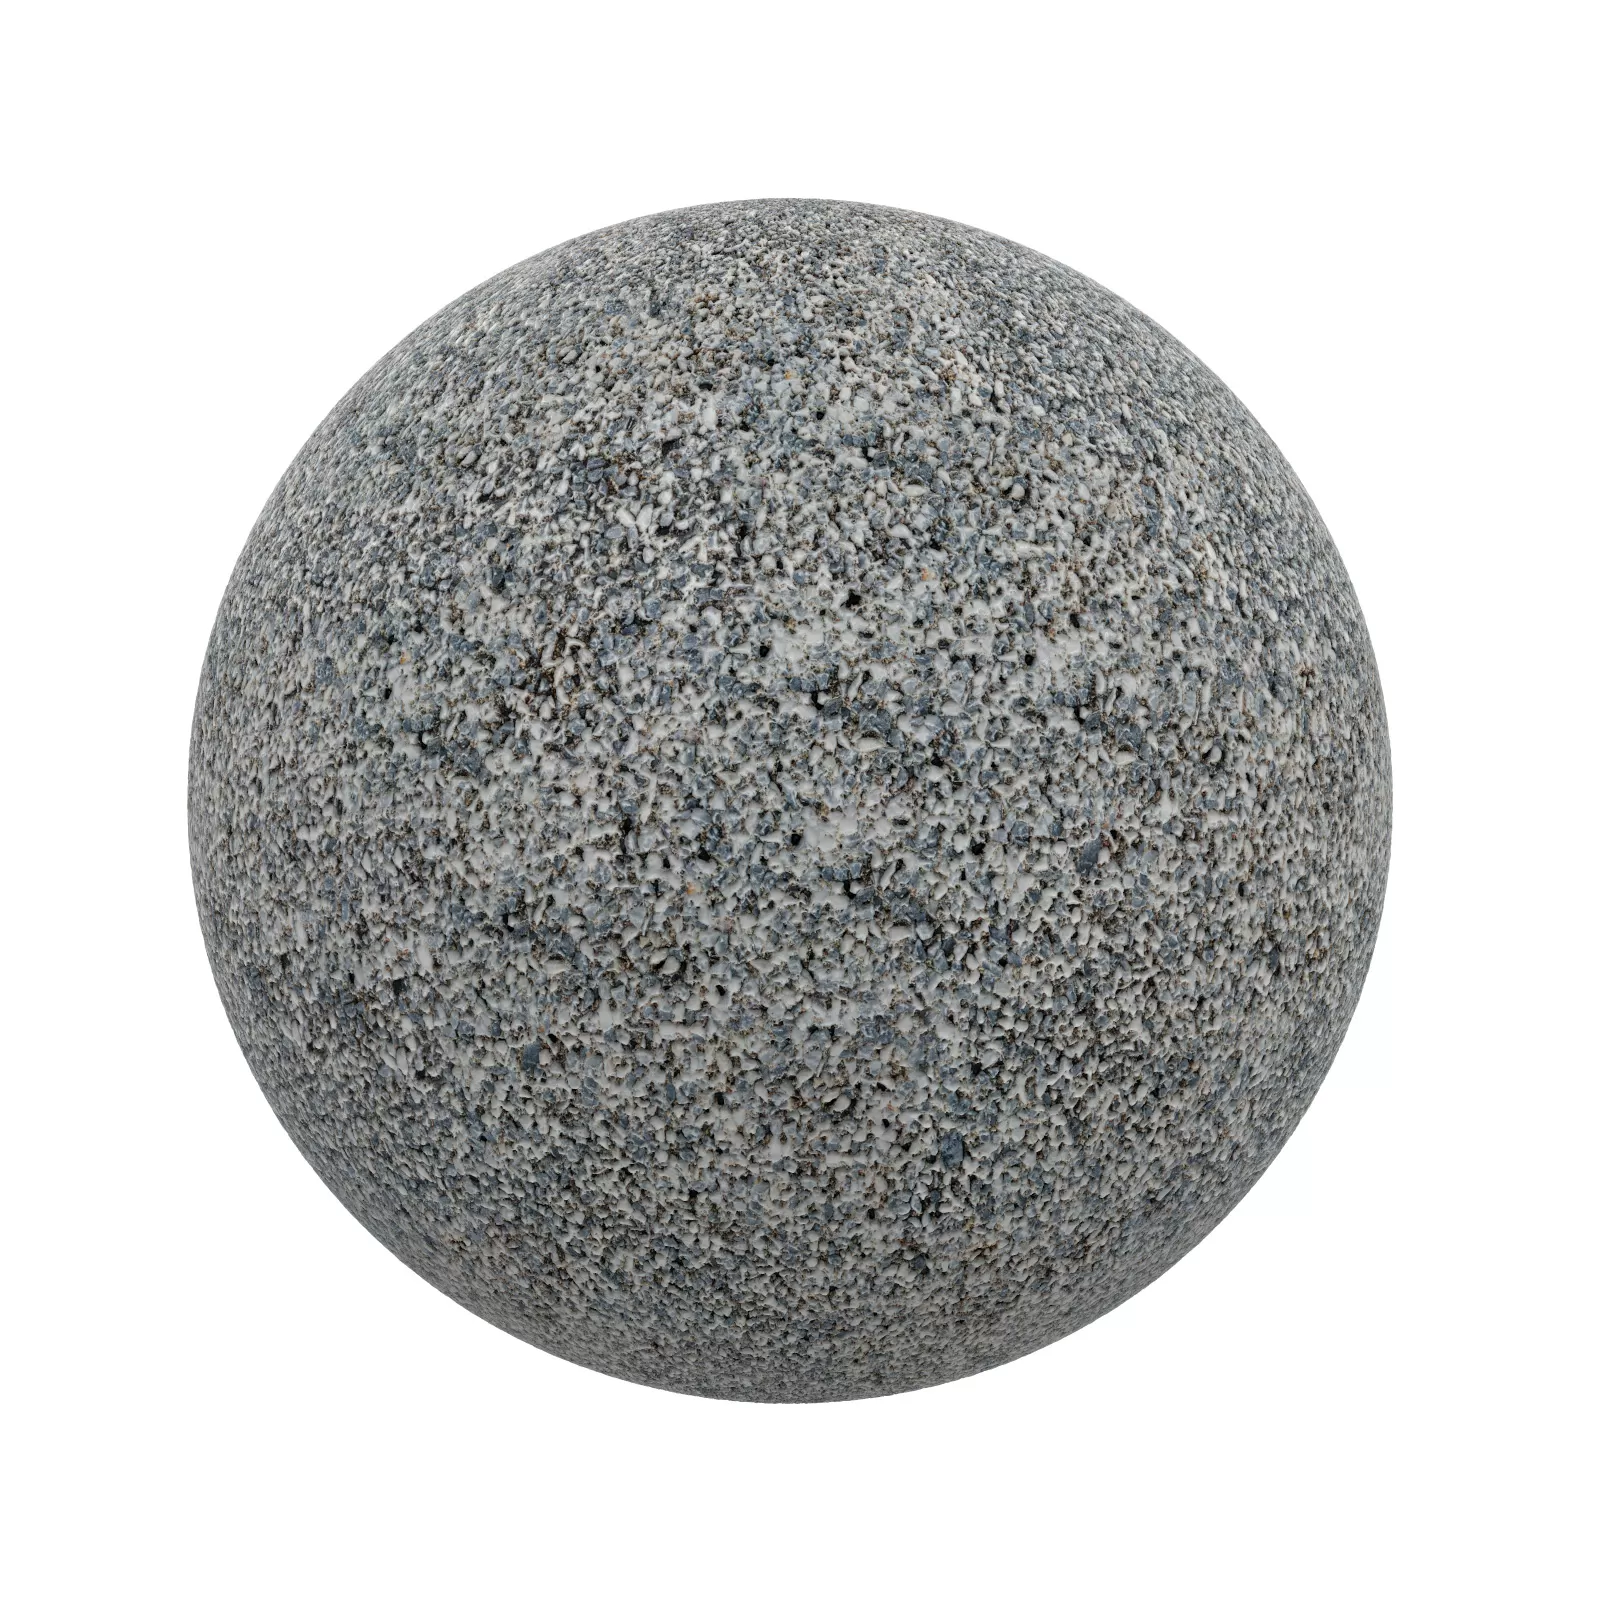 TEXTURES – STONES – CGAxis PBR Colection Vol 1 Stones – rough grey granite